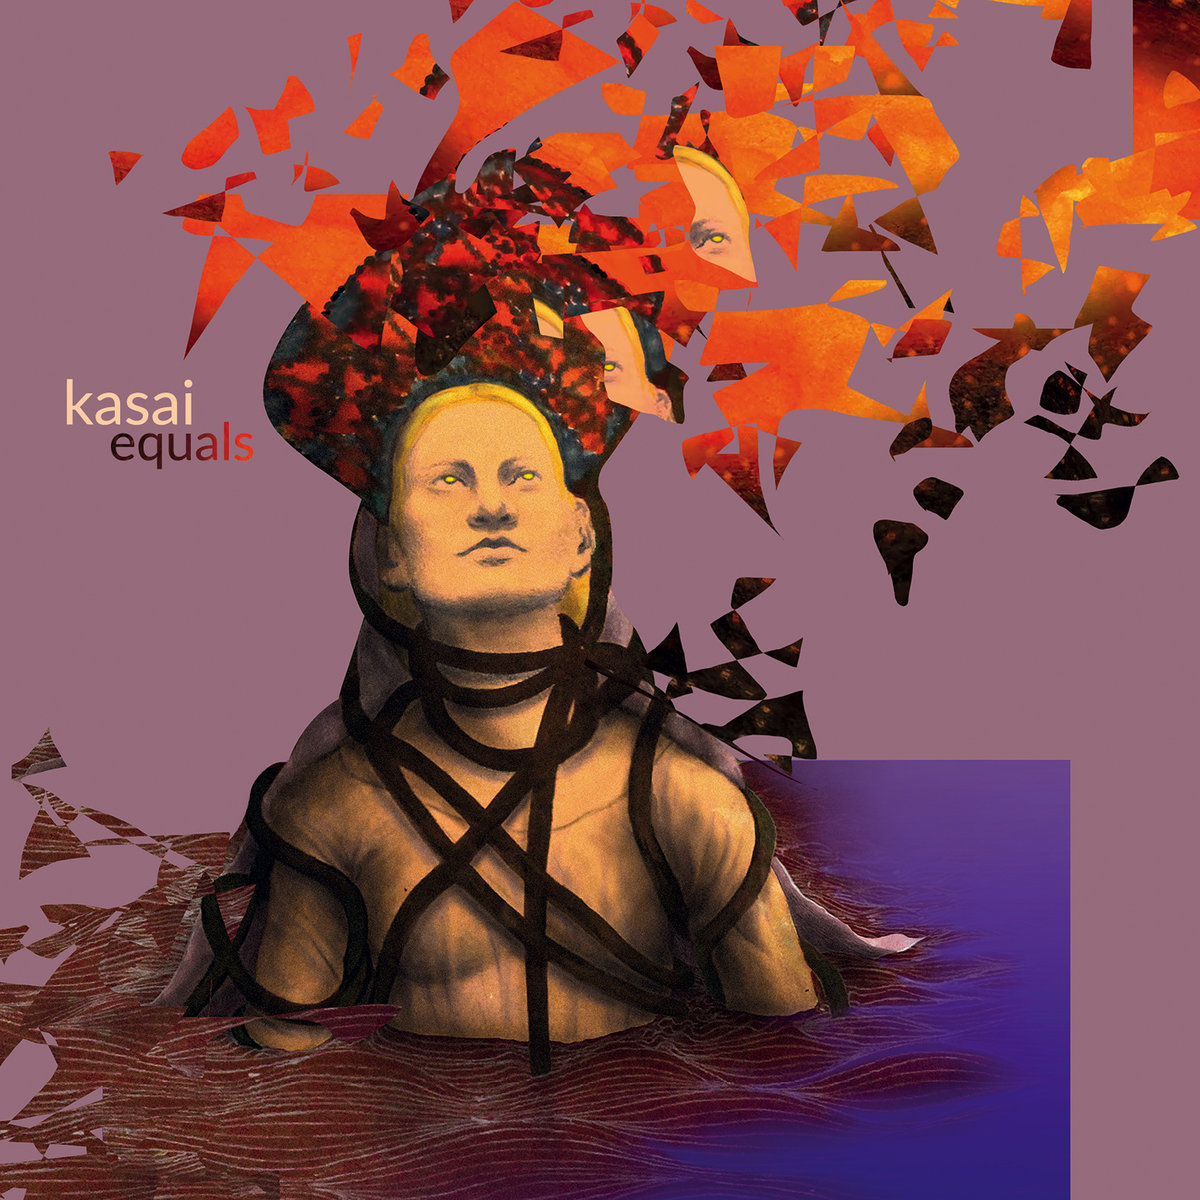 Kasai "Equals"